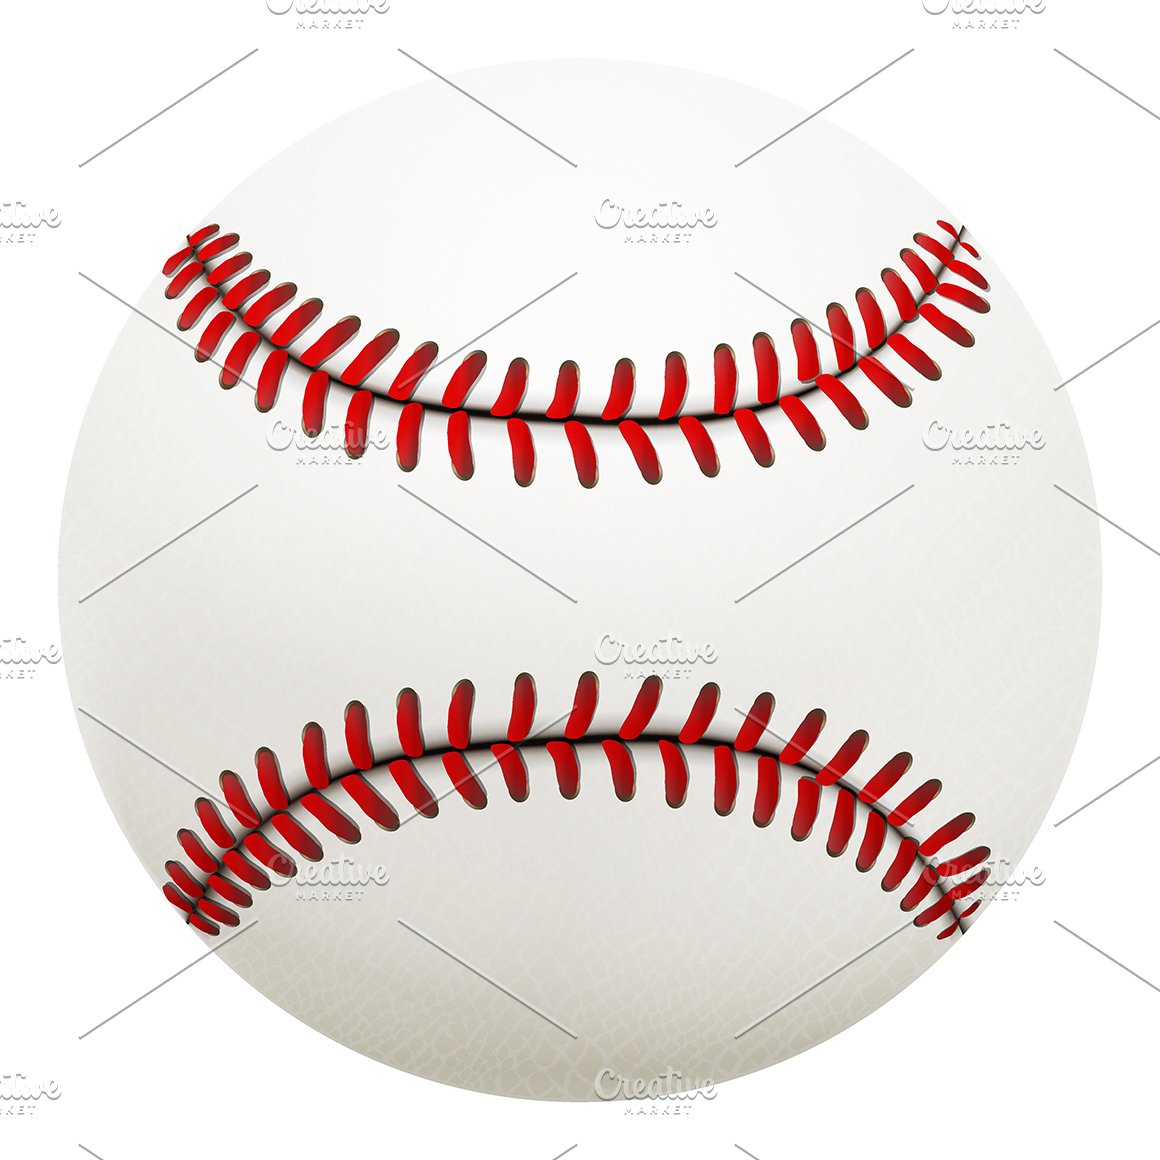 Classic baseball ball.